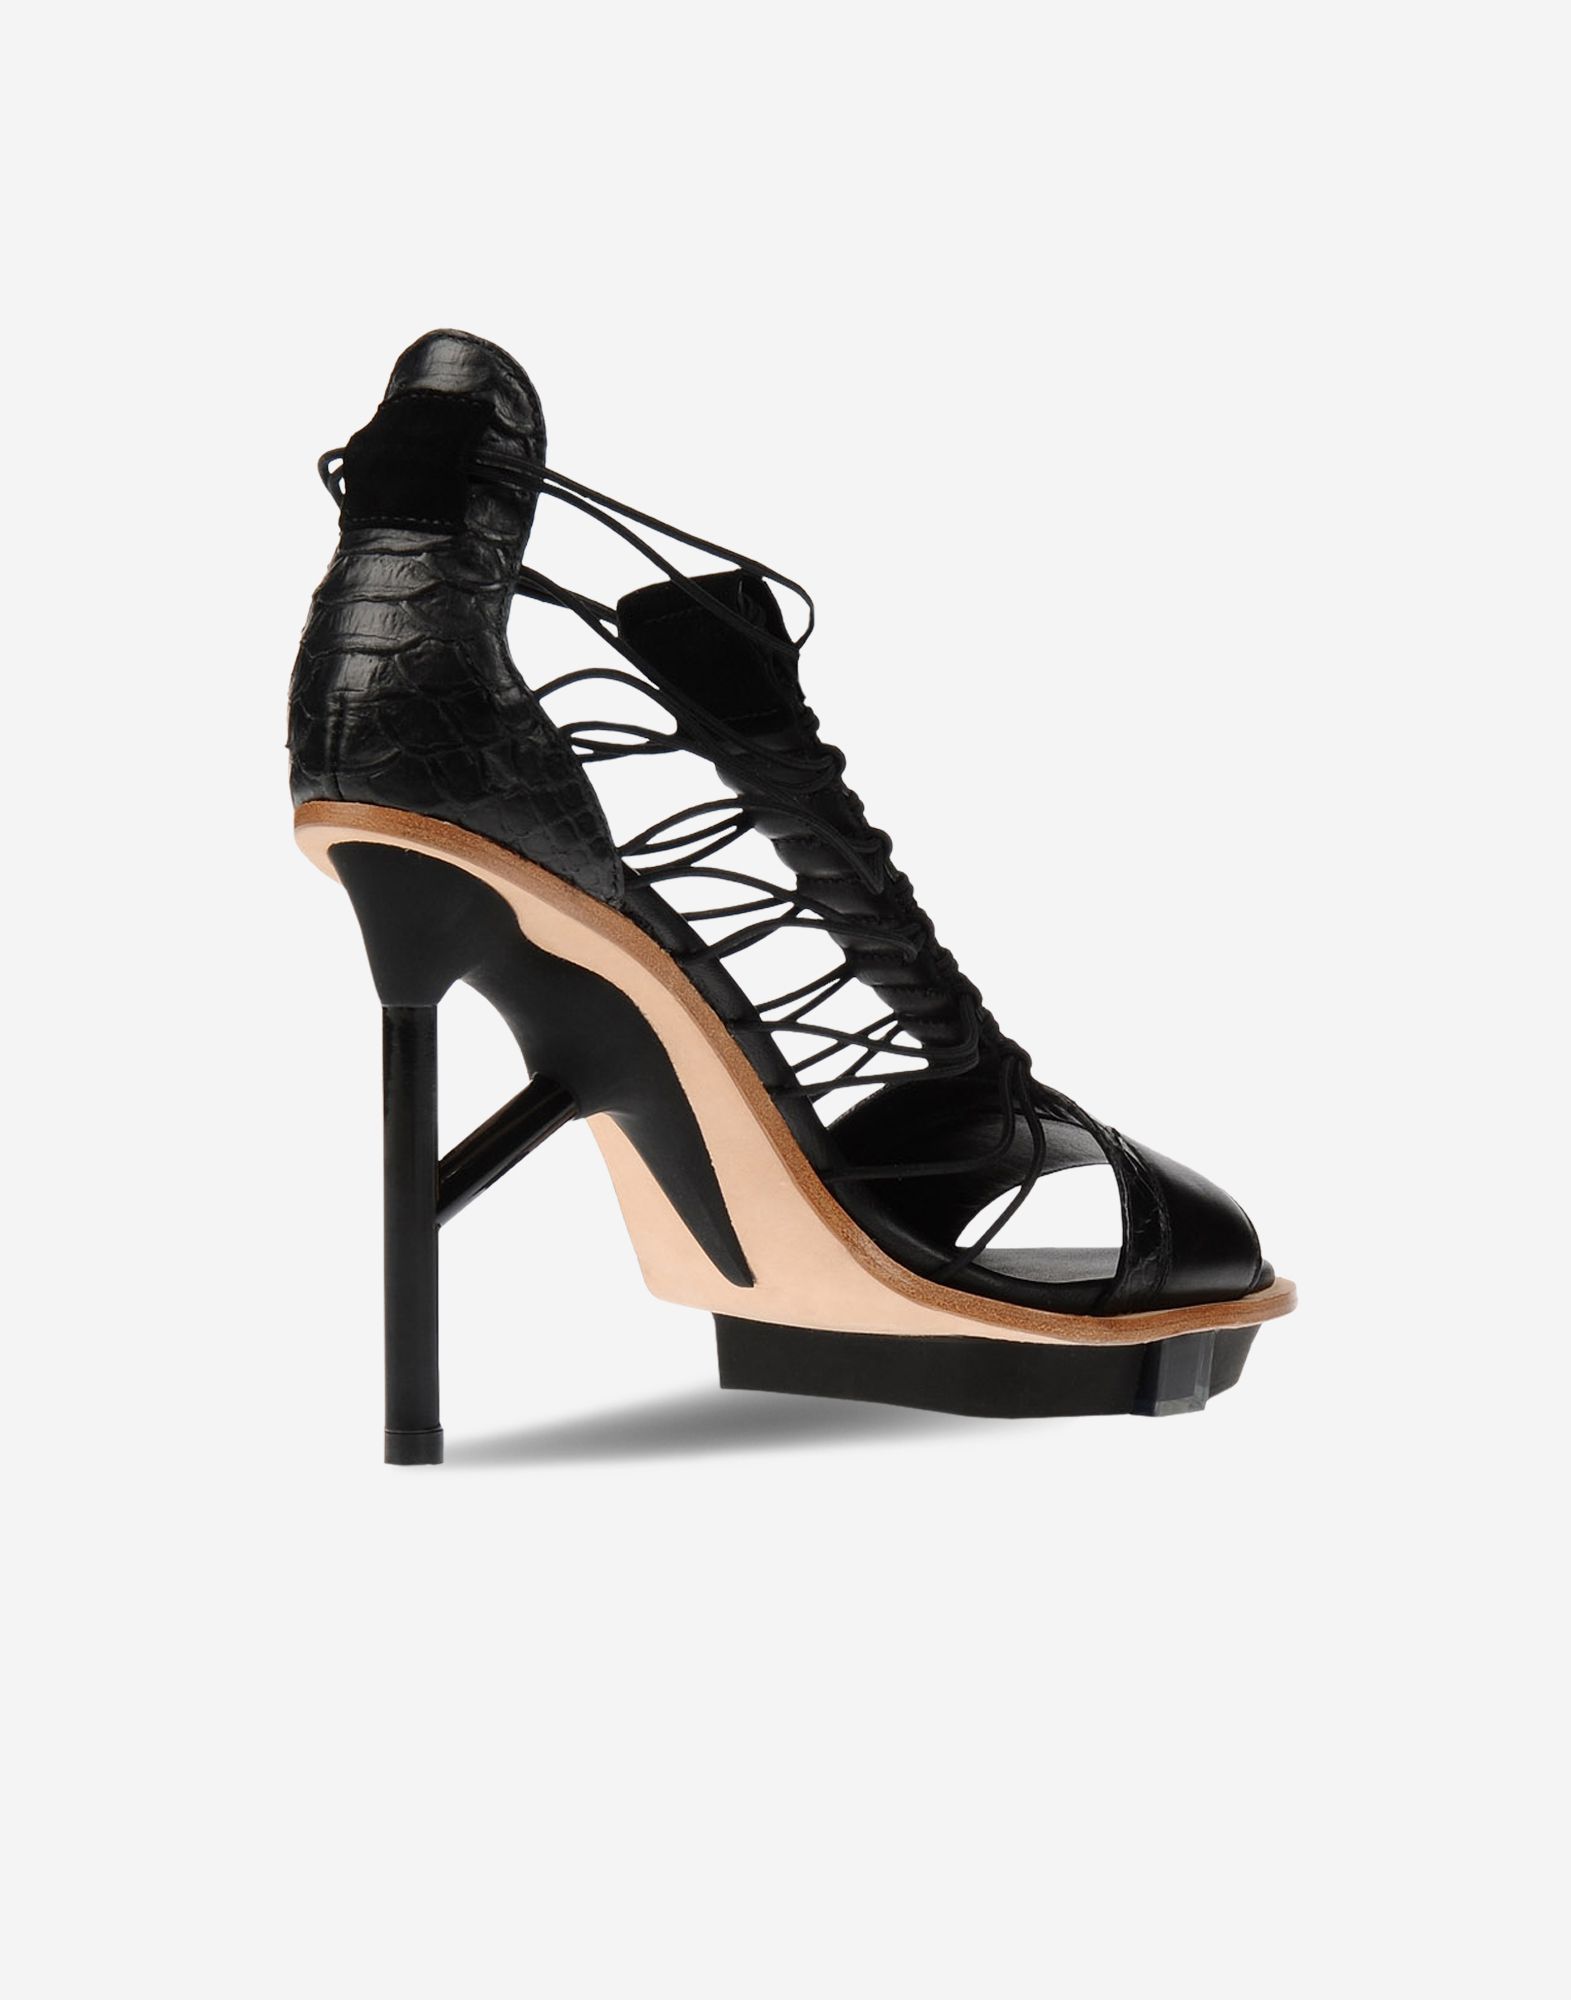 adidas y3 heels- OFF 68% - www.butc.co.za!